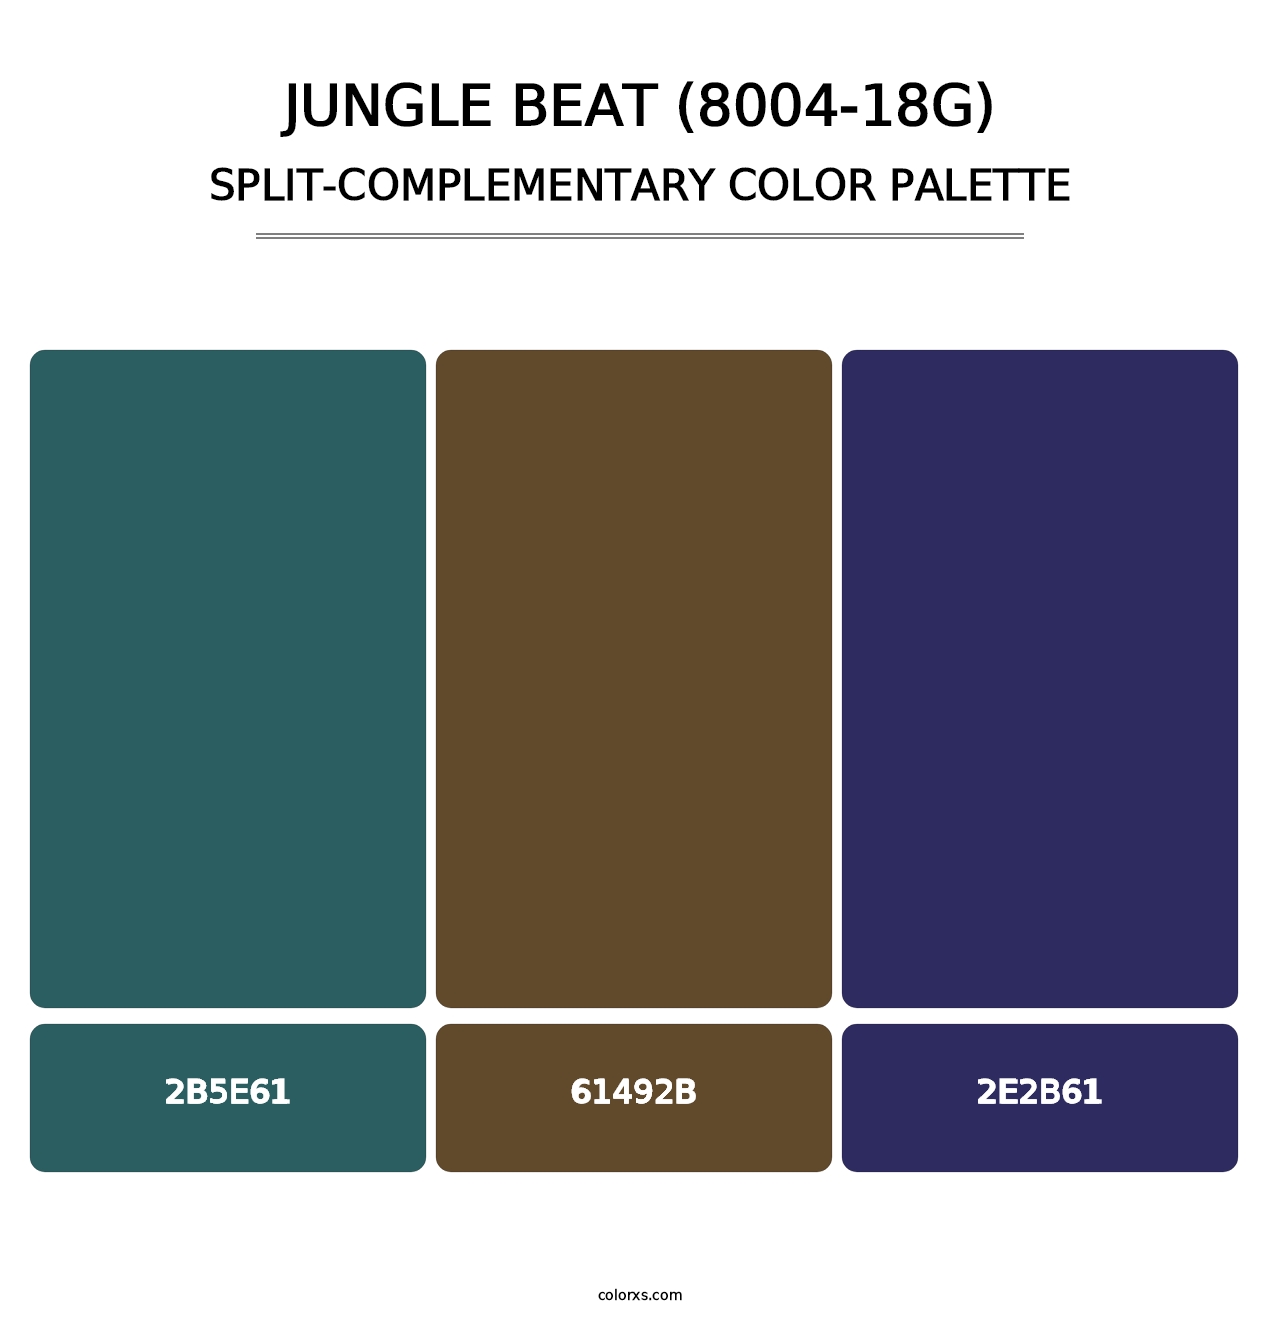 Jungle Beat (8004-18G) - Split-Complementary Color Palette